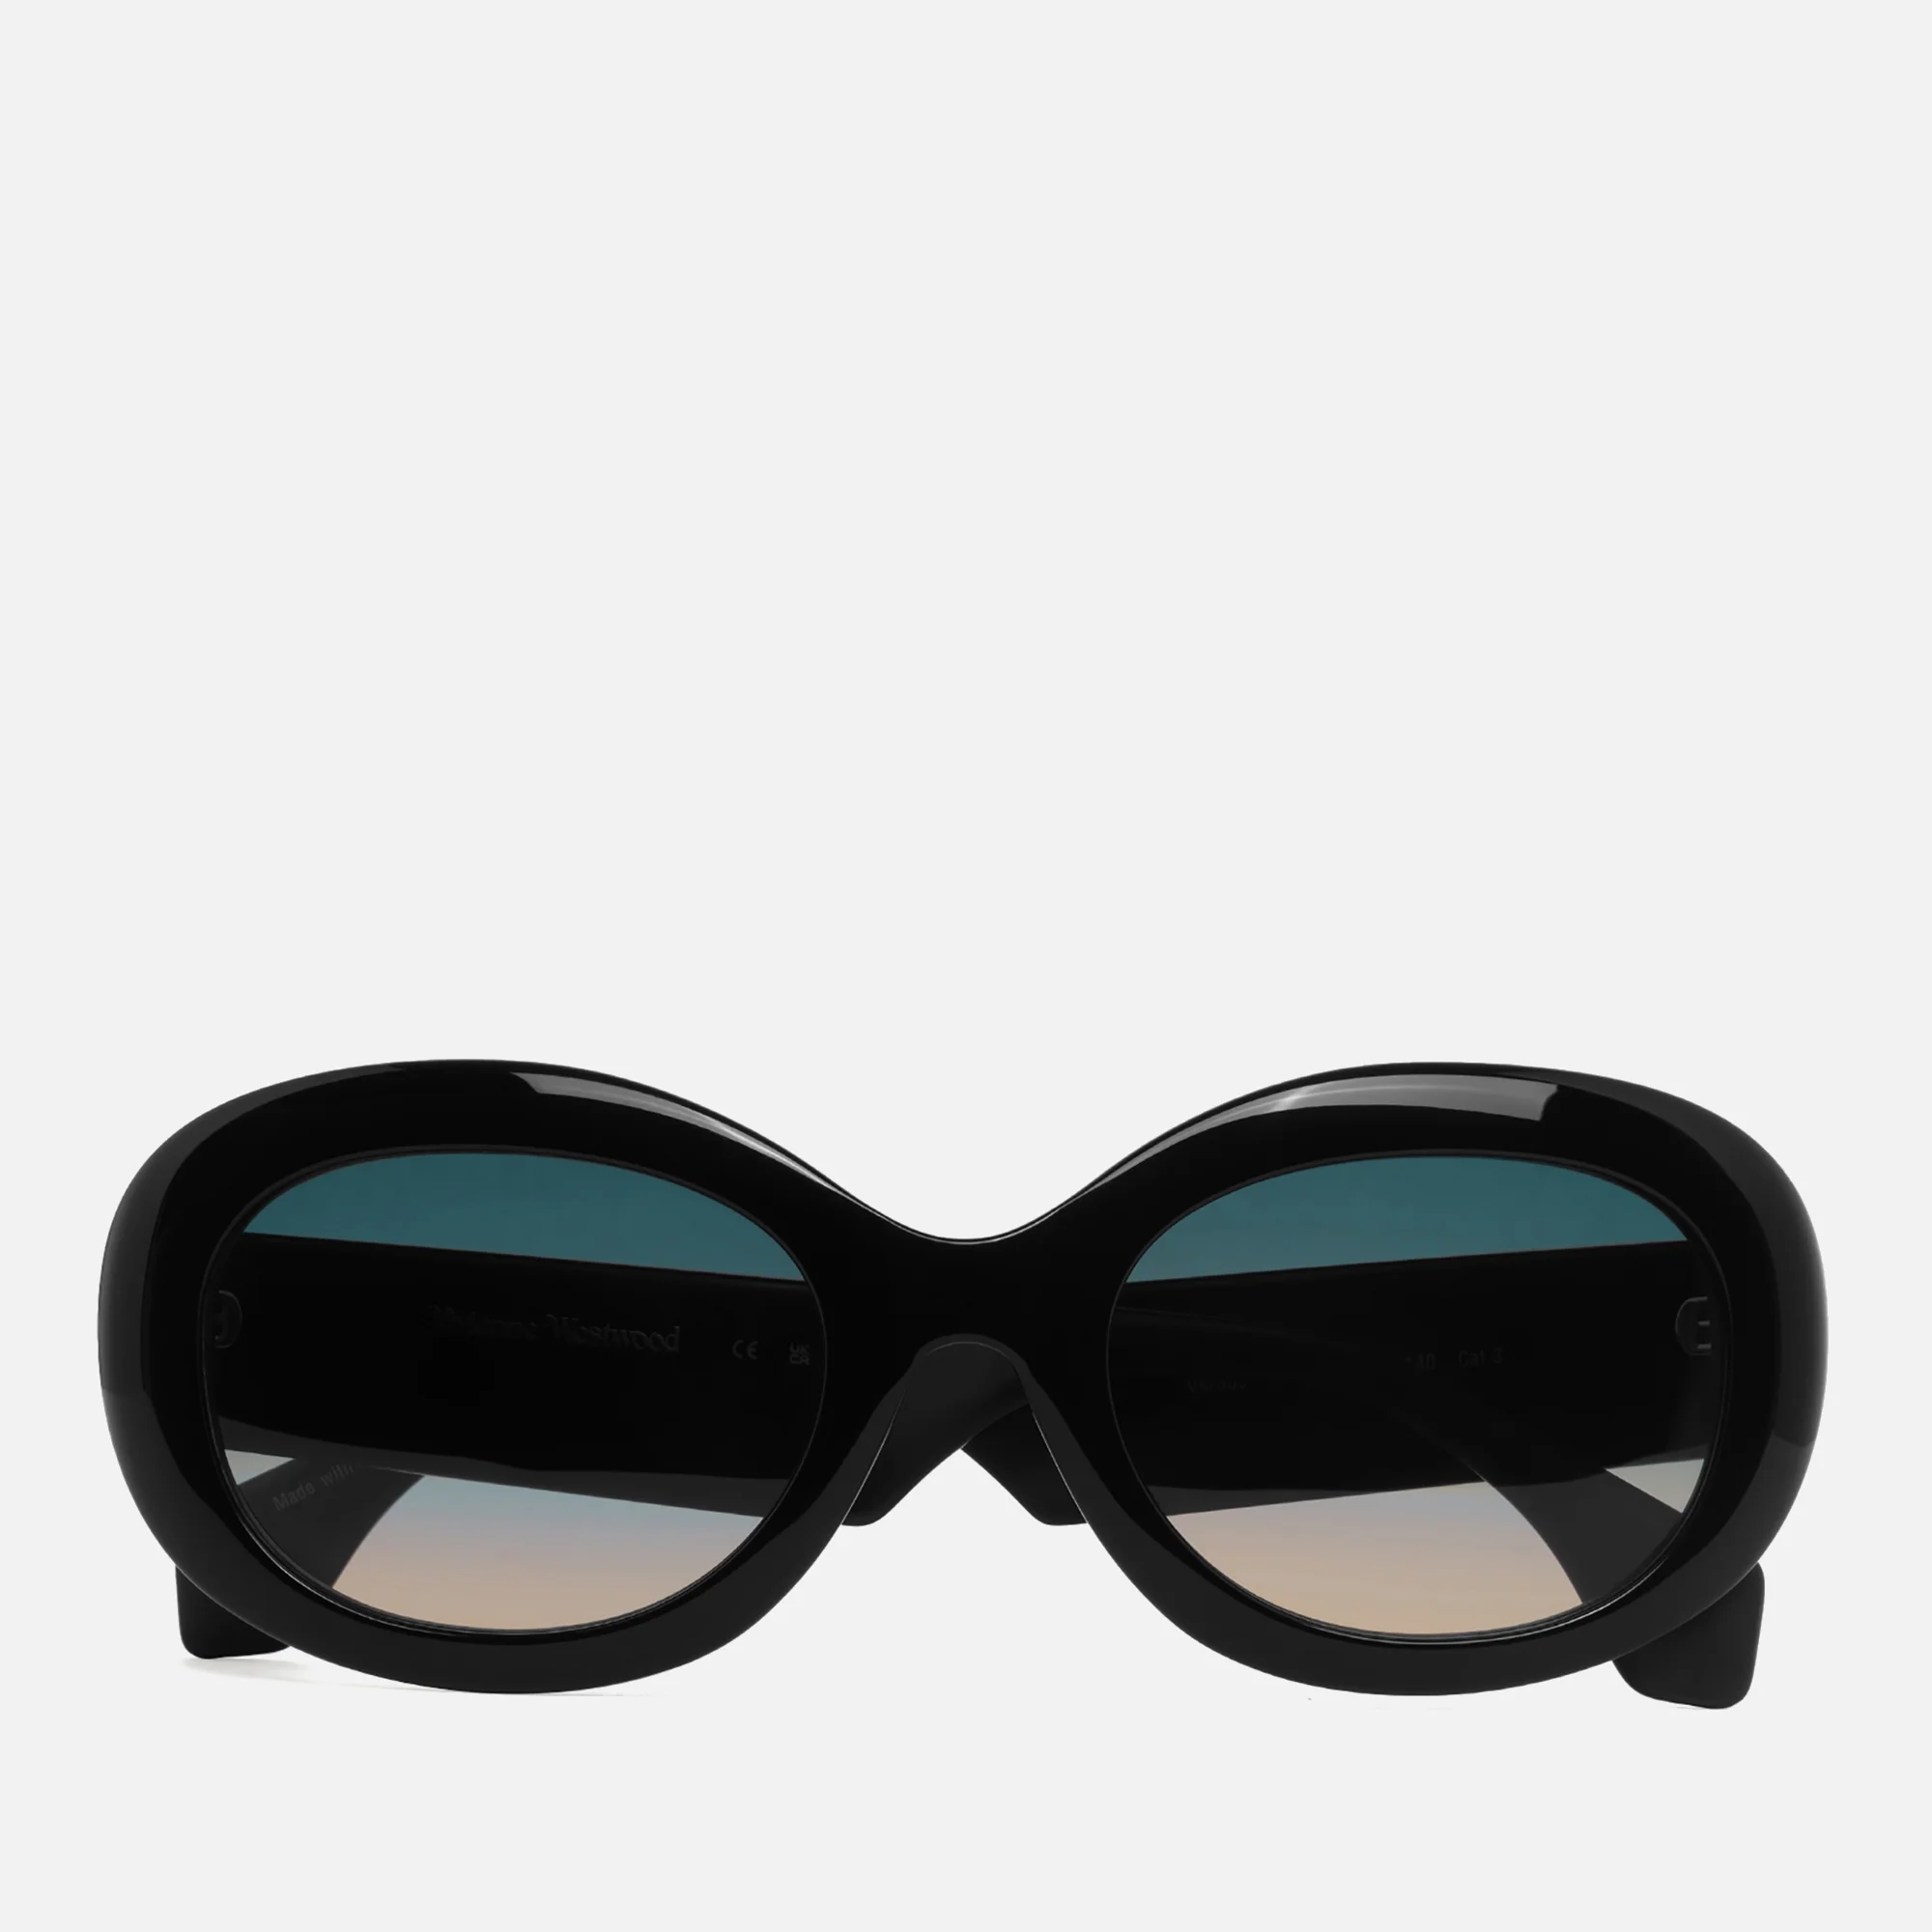 Vivienne Westwood Women's The Vivienne Acetate Sunglasses - Shiny Gloss Black Image 1